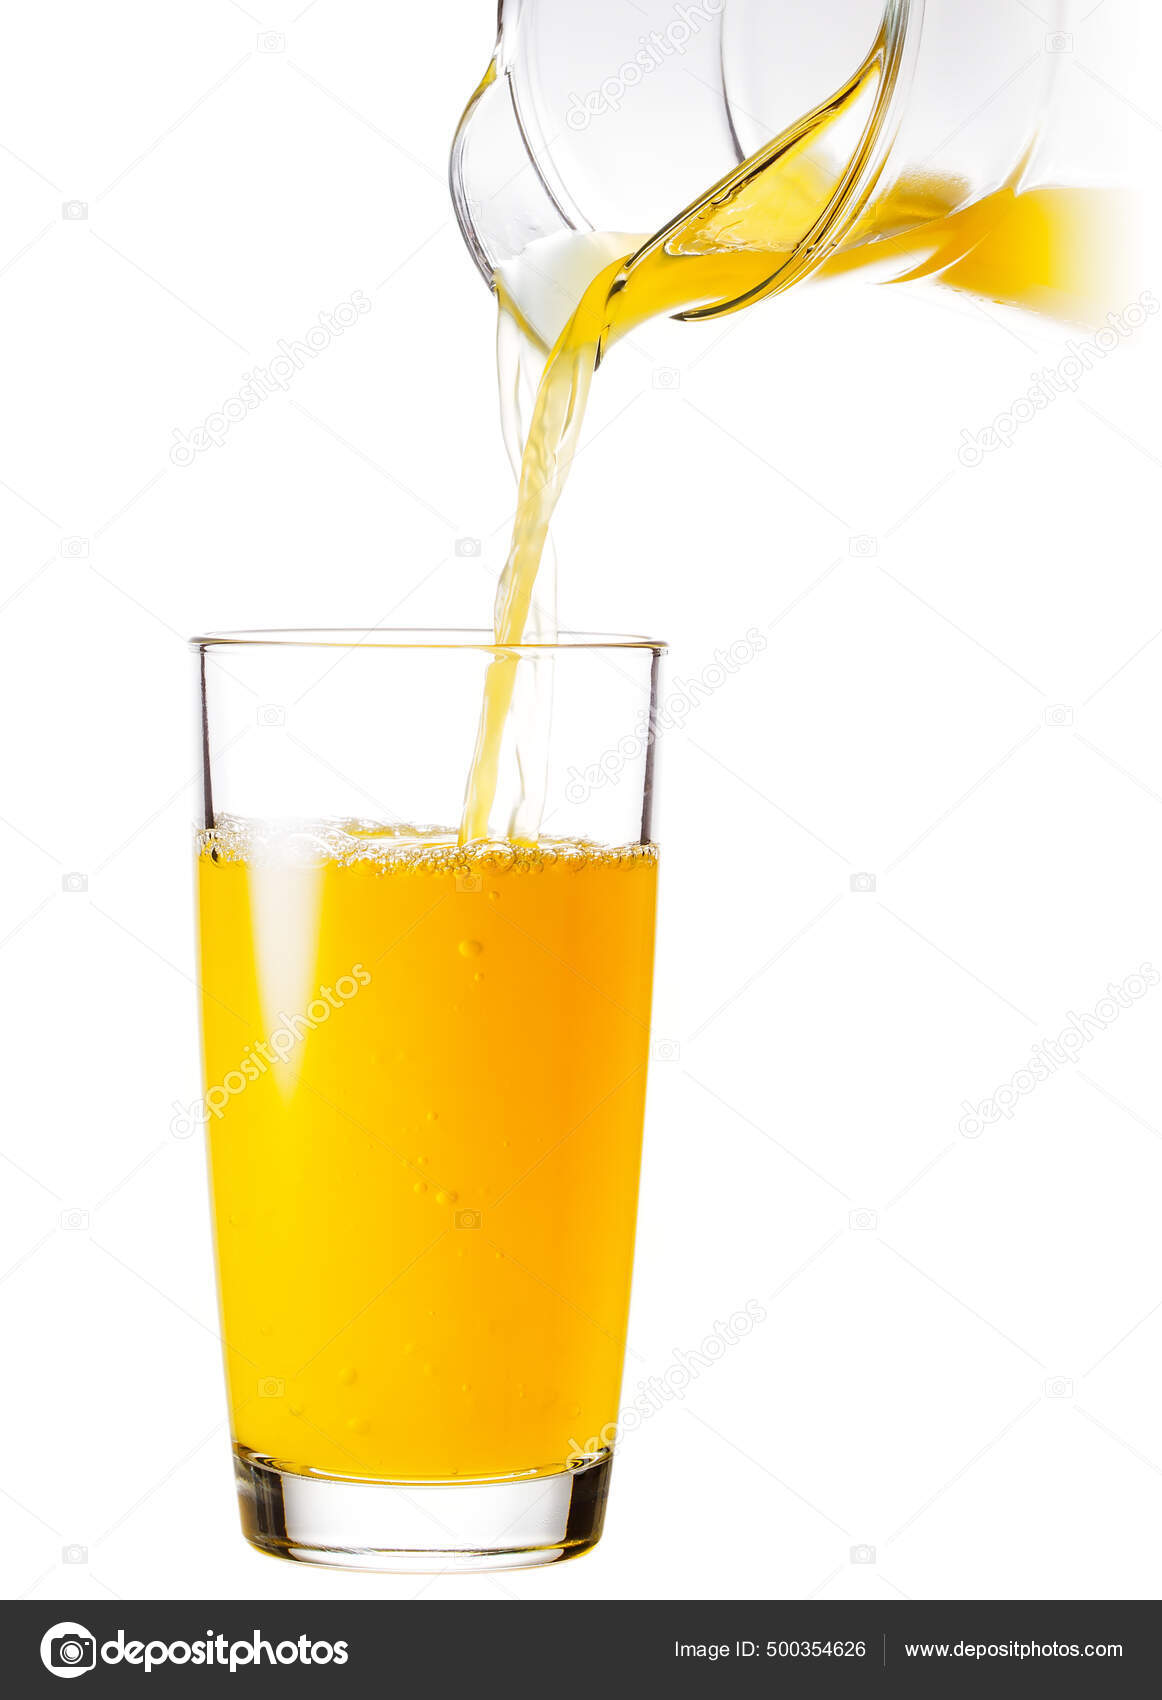 https://st3.depositphotos.com/29384342/50035/i/1600/depositphotos_500354626-stock-photo-glass-jug-orange-juice-poured.jpg